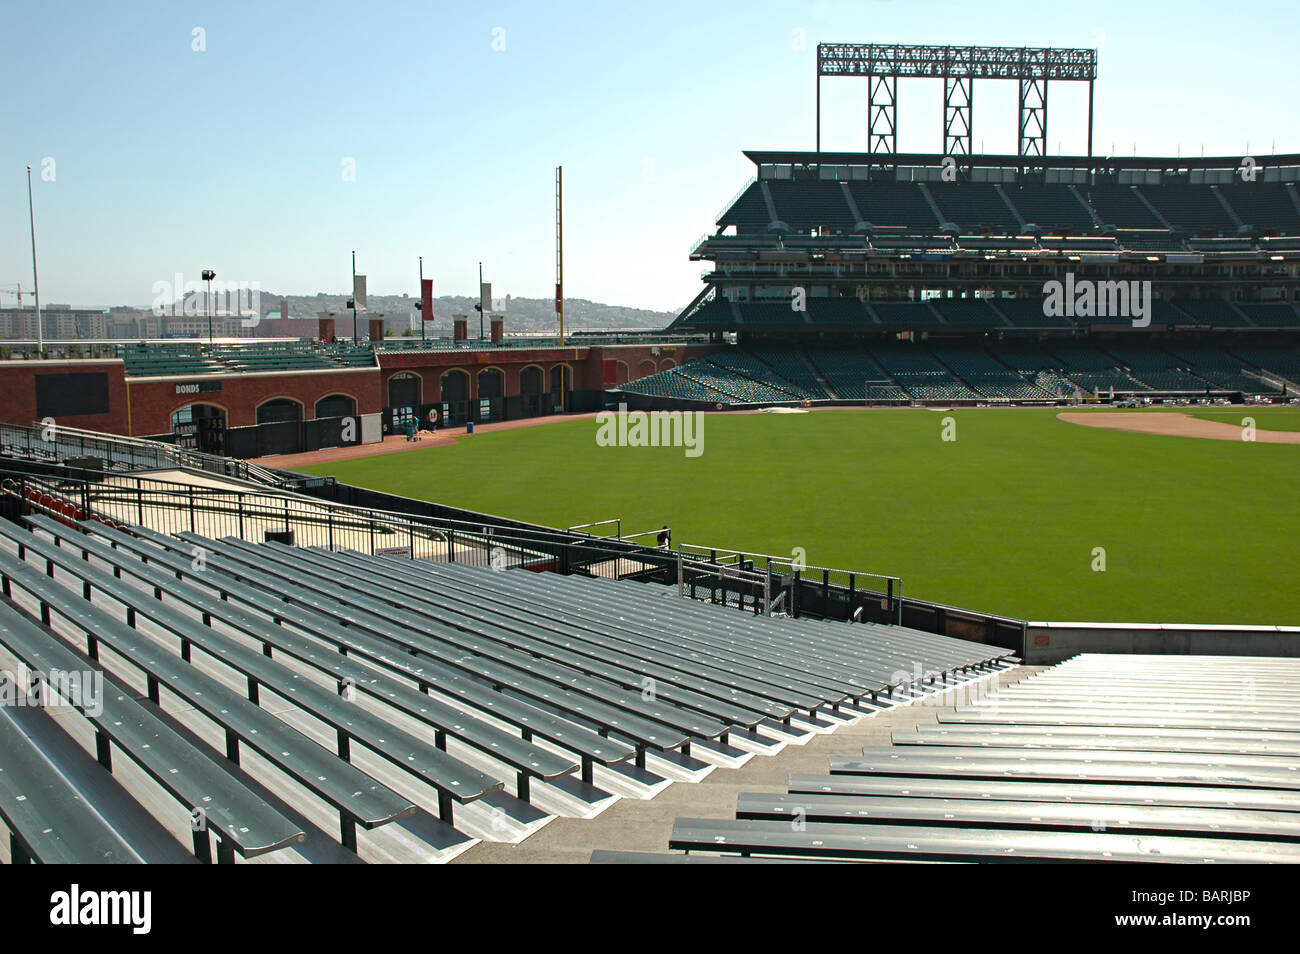 Baseball bleachers field and stands at Giants Stadium San Francisco California Stock Photo